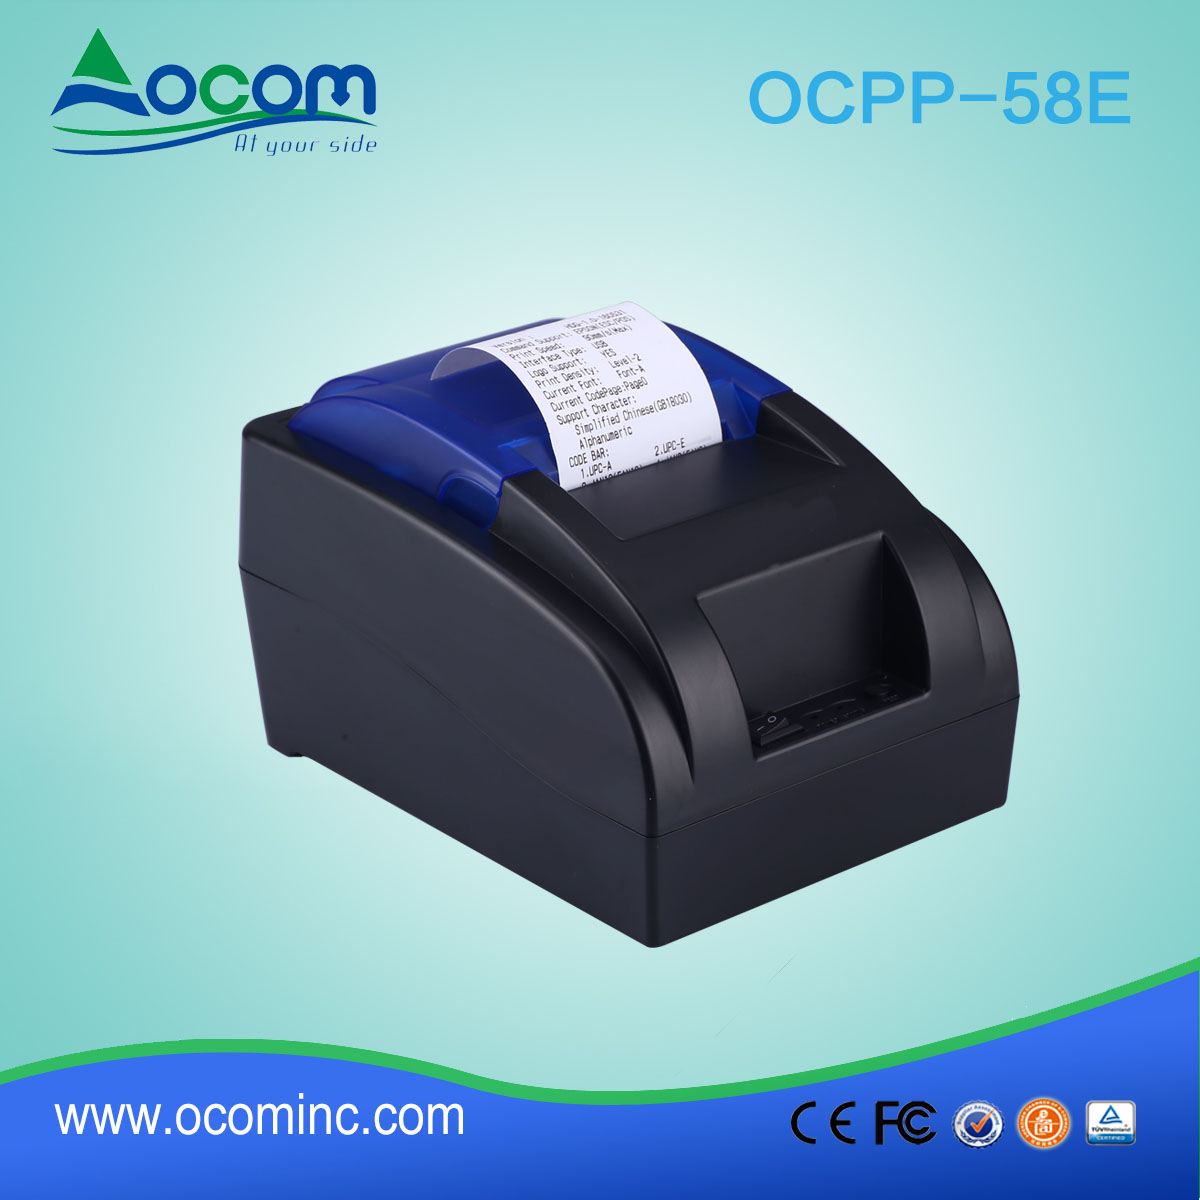 OCPP-58E 58mm thermal receipt printer